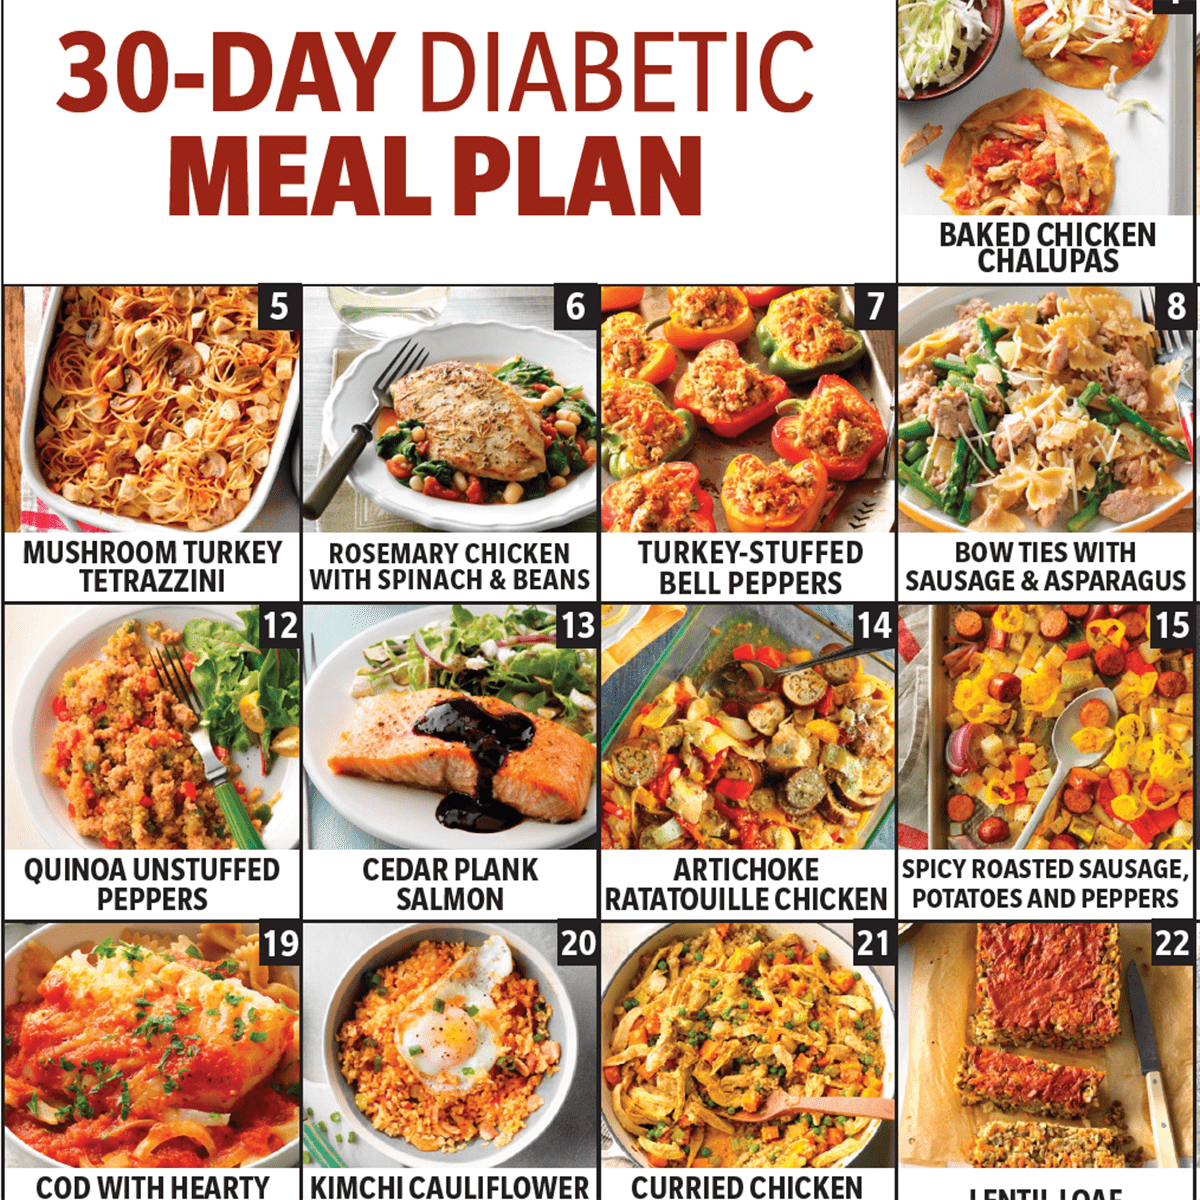 https://www.tasteofhome.com/wp-content/uploads/2020/09/30-day-diabetic-meal-plan_slide.png?fit=700%2C700